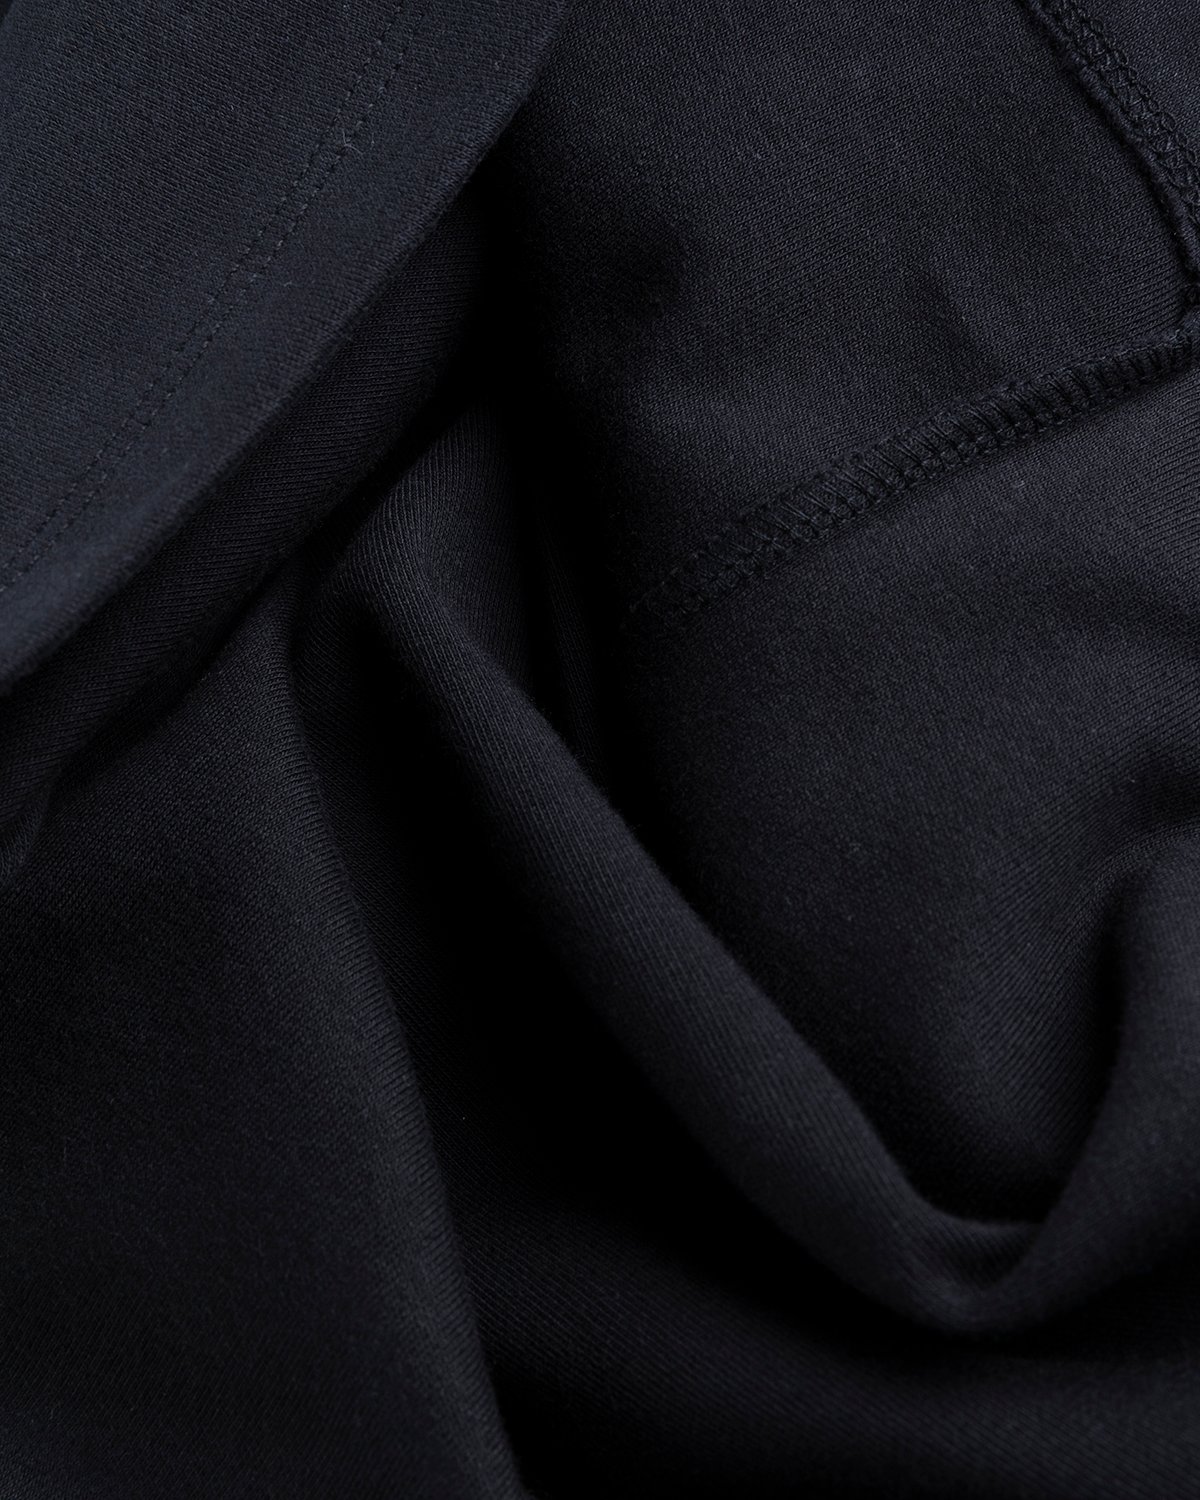 The North Face - Longsleeve Black - Clothing - Black - Image 6